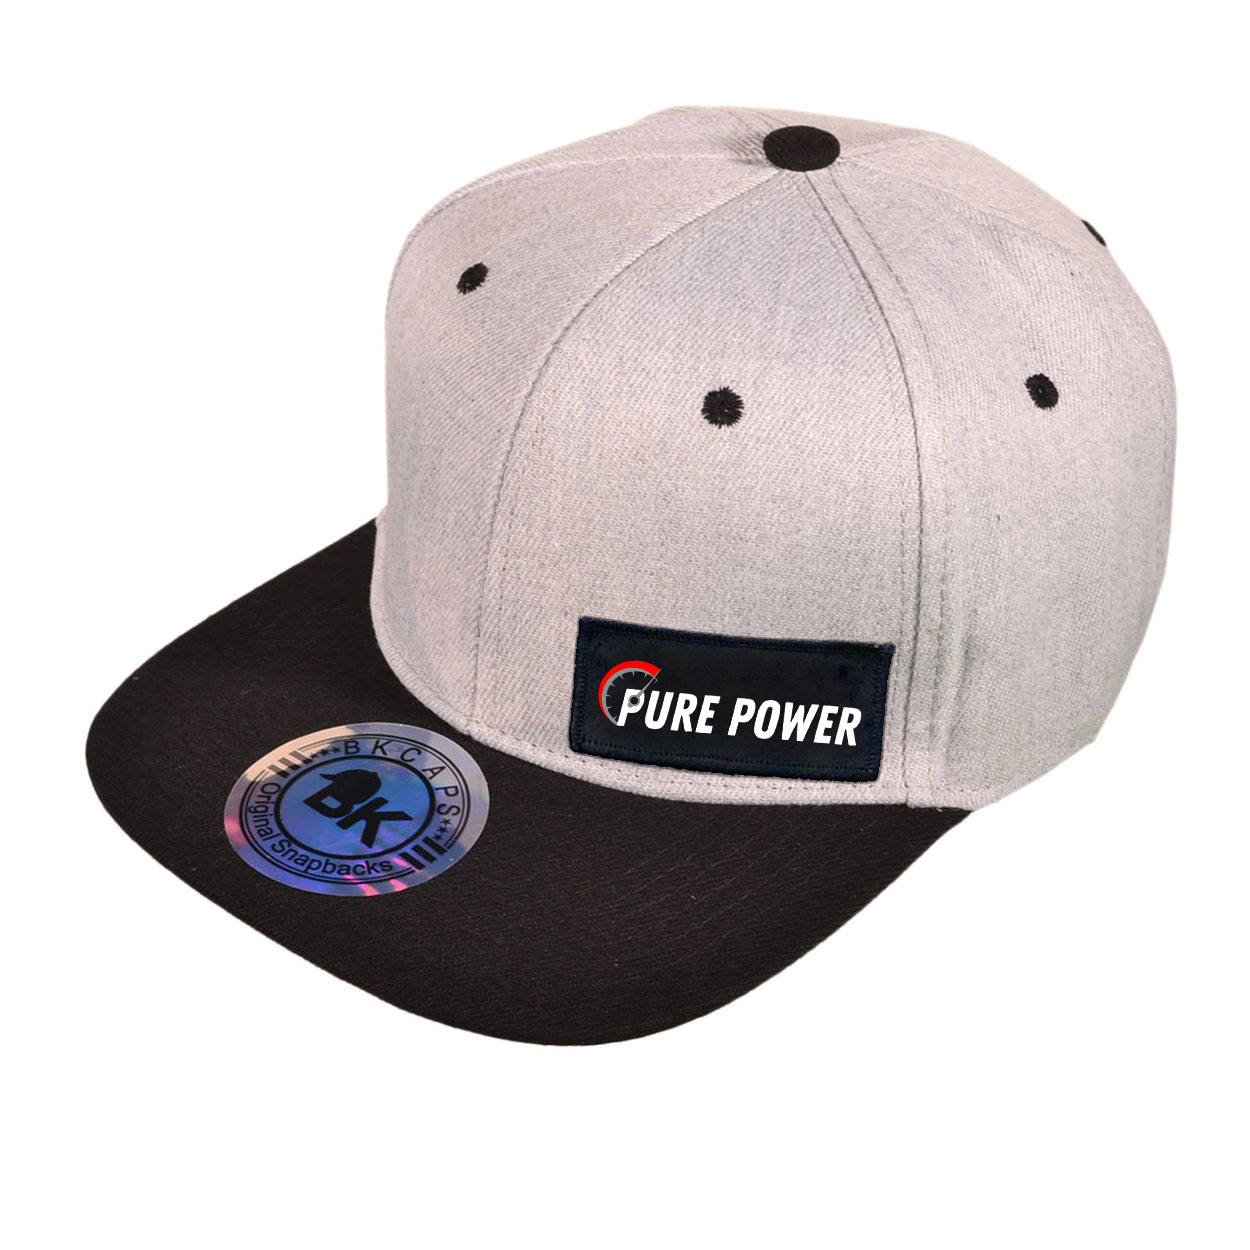 Ride Pure Power Logo Night Out Woven Patch Snapback Flat Brim Hat Heather Gray/Black (White Logo)